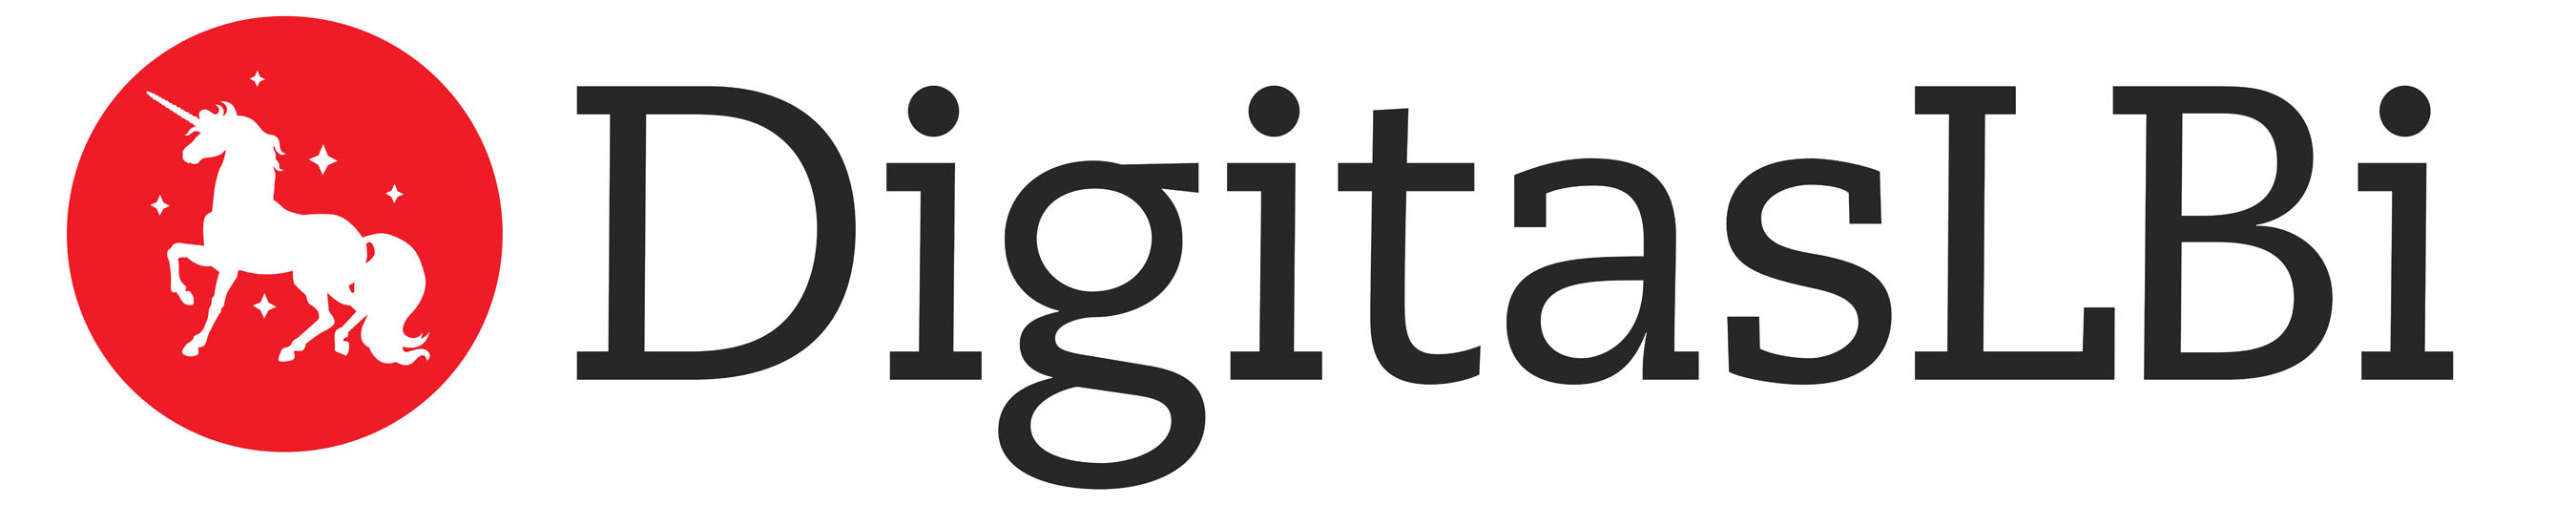 DigitasLBi Logo.